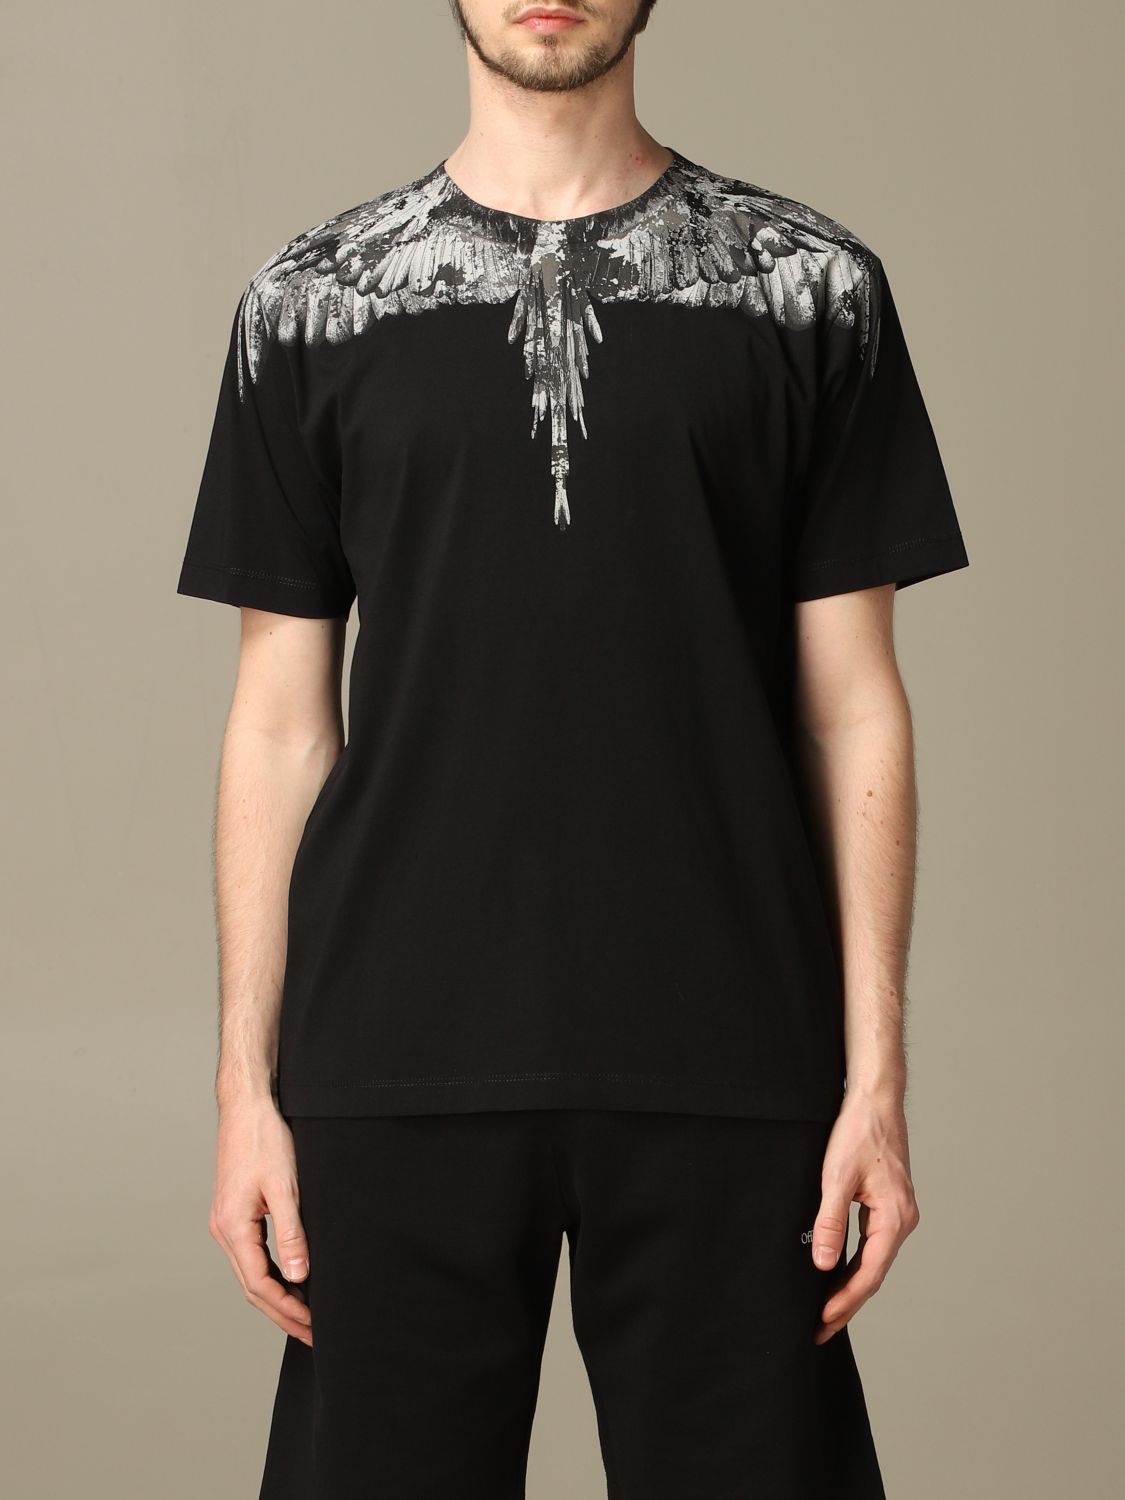 MARCELO BURLON: T-shirt with camouflage print - Black | Marcelo Burlon online at GIGLIO.COM